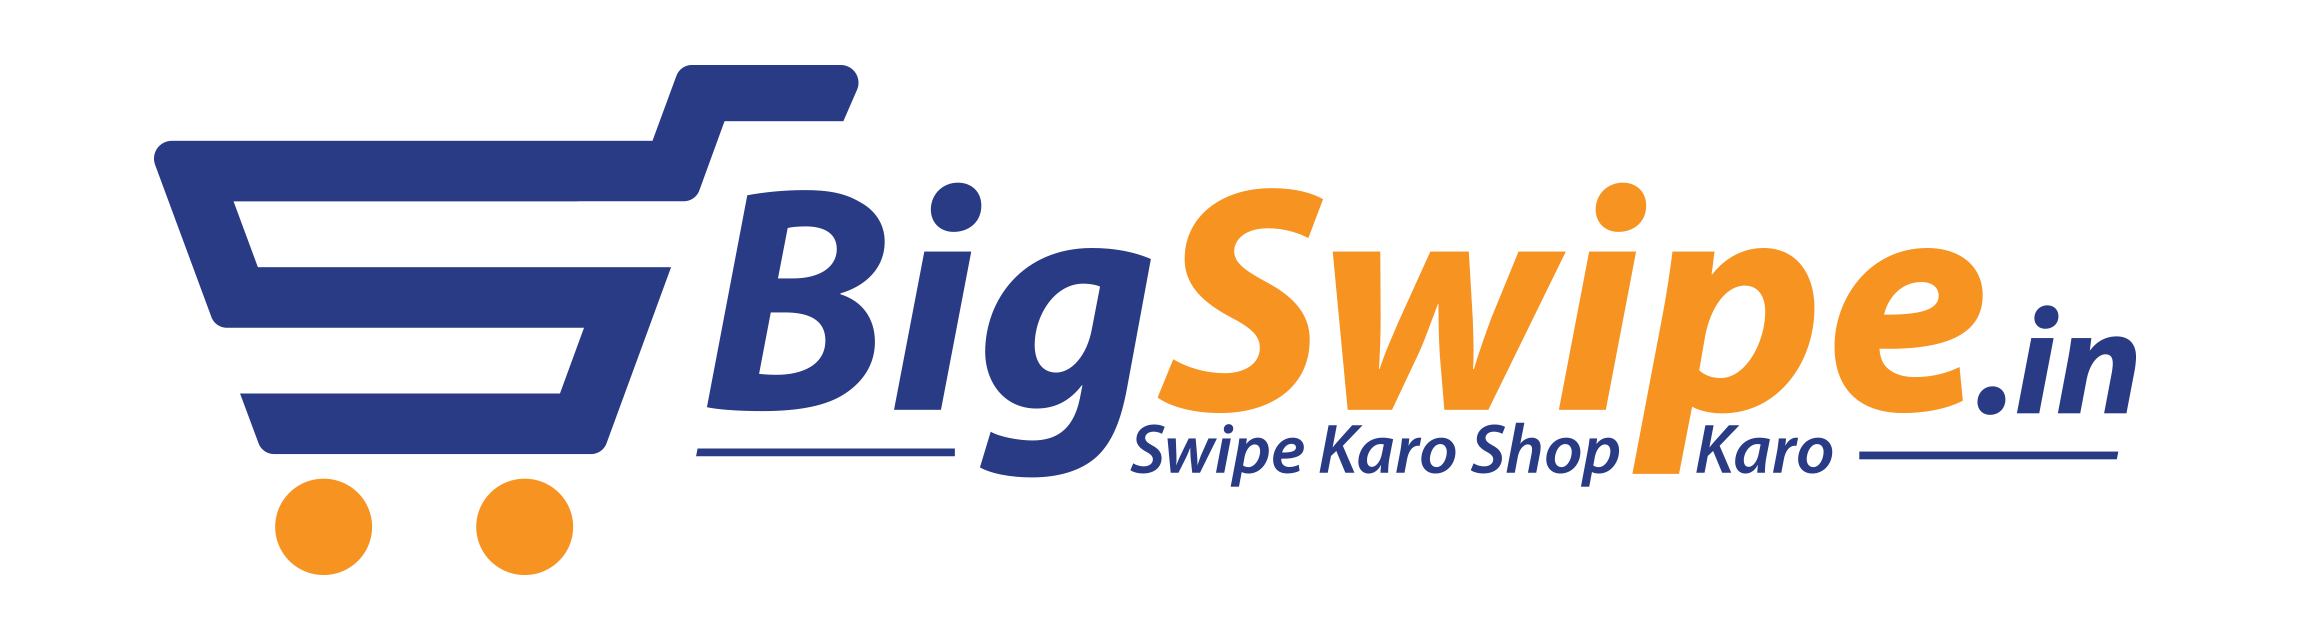 bigswipes